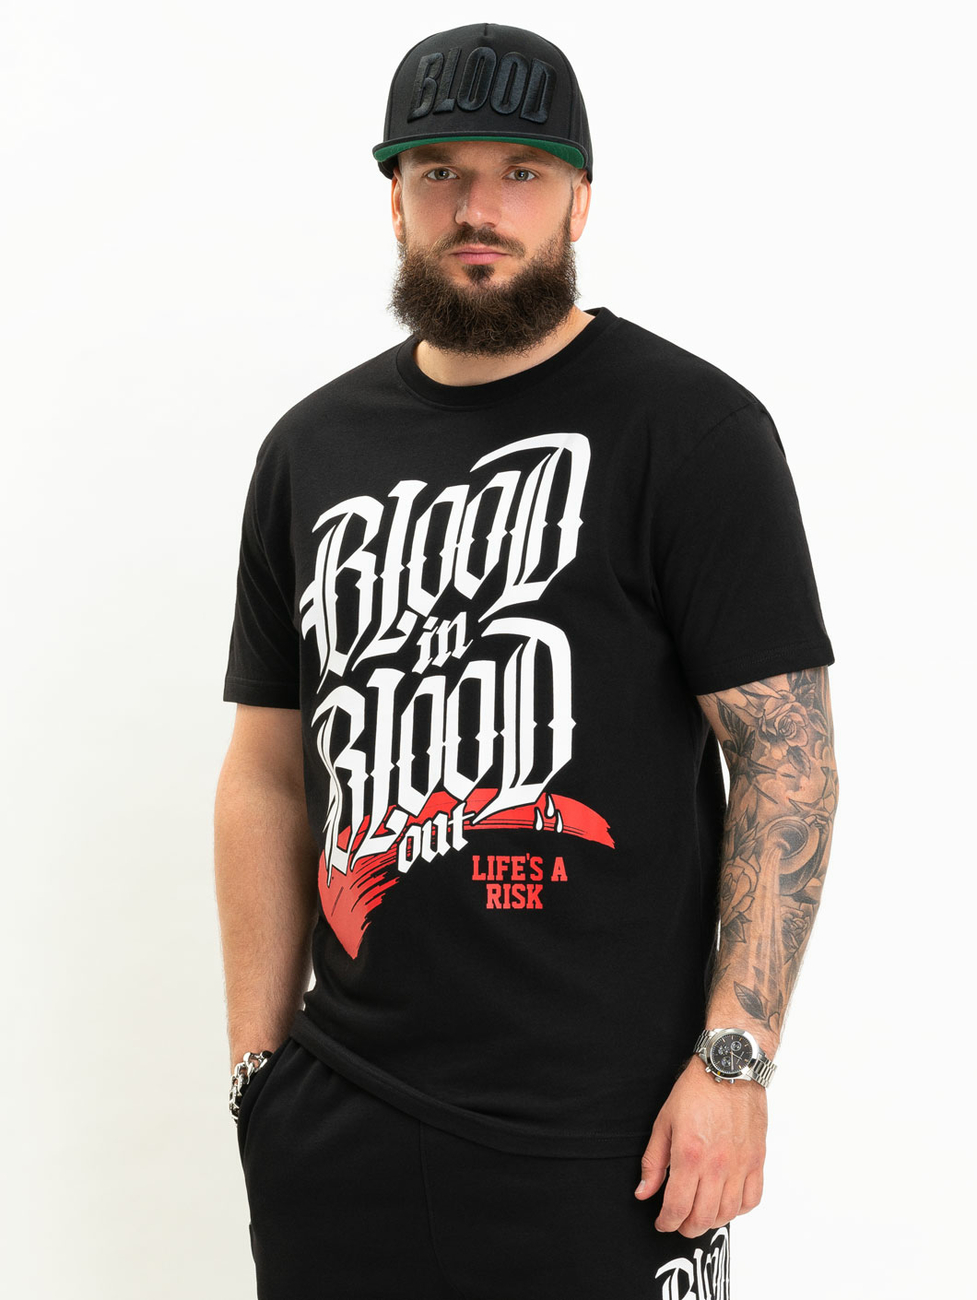 Blood In Blood Out Tranjeros T-Shirt 2XL